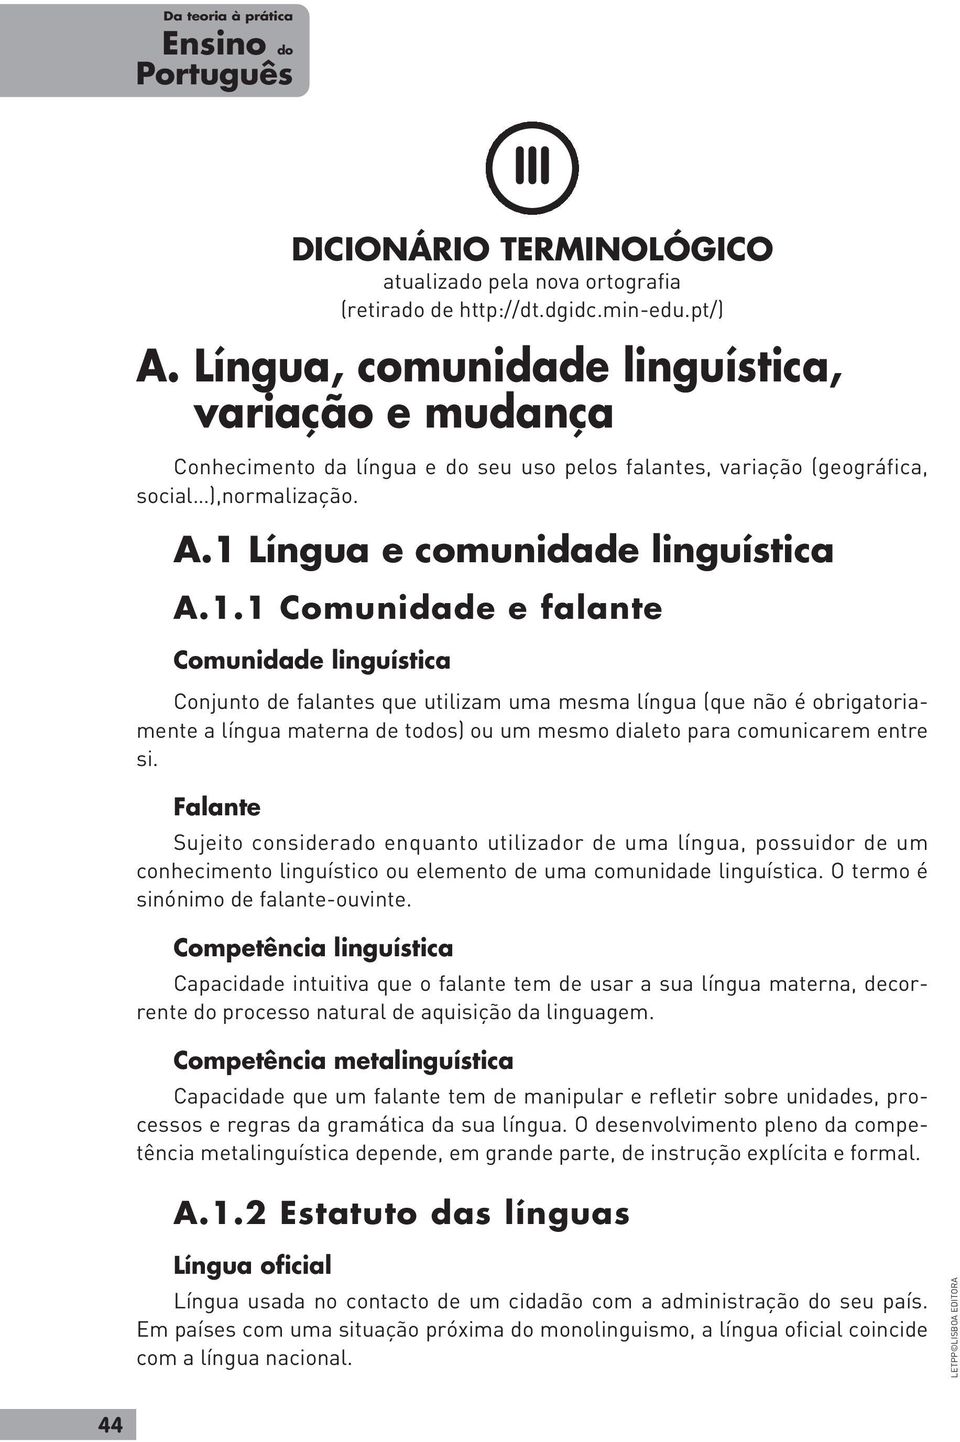 Língua e comunidade linguística A.1.